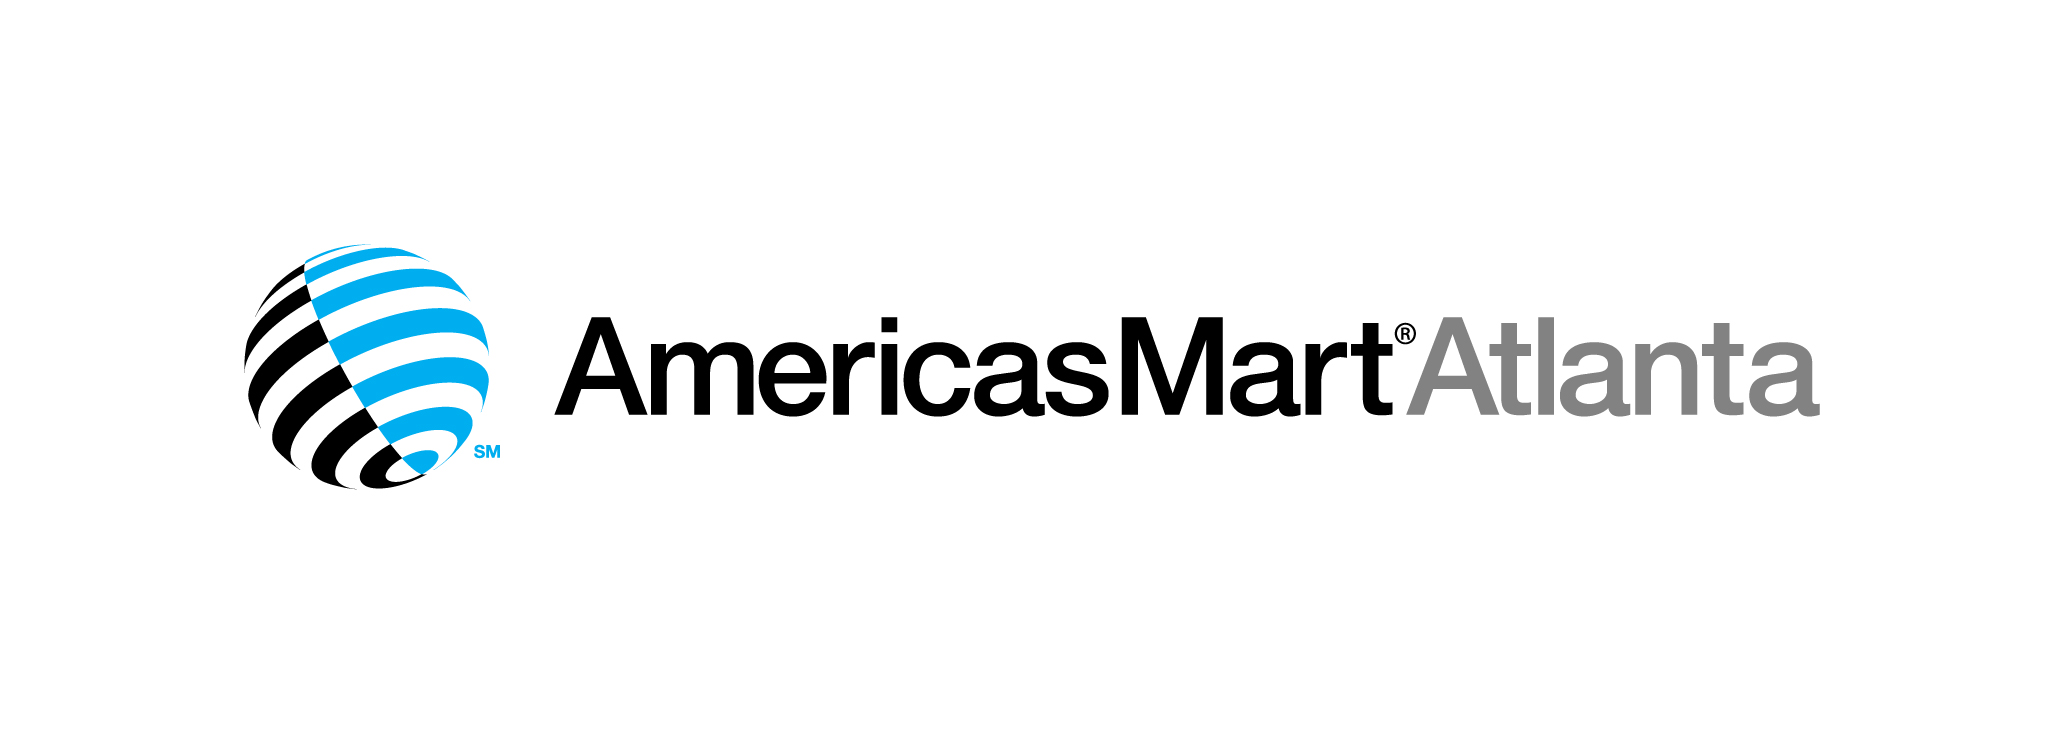 Old AmericasMart Globe Logo